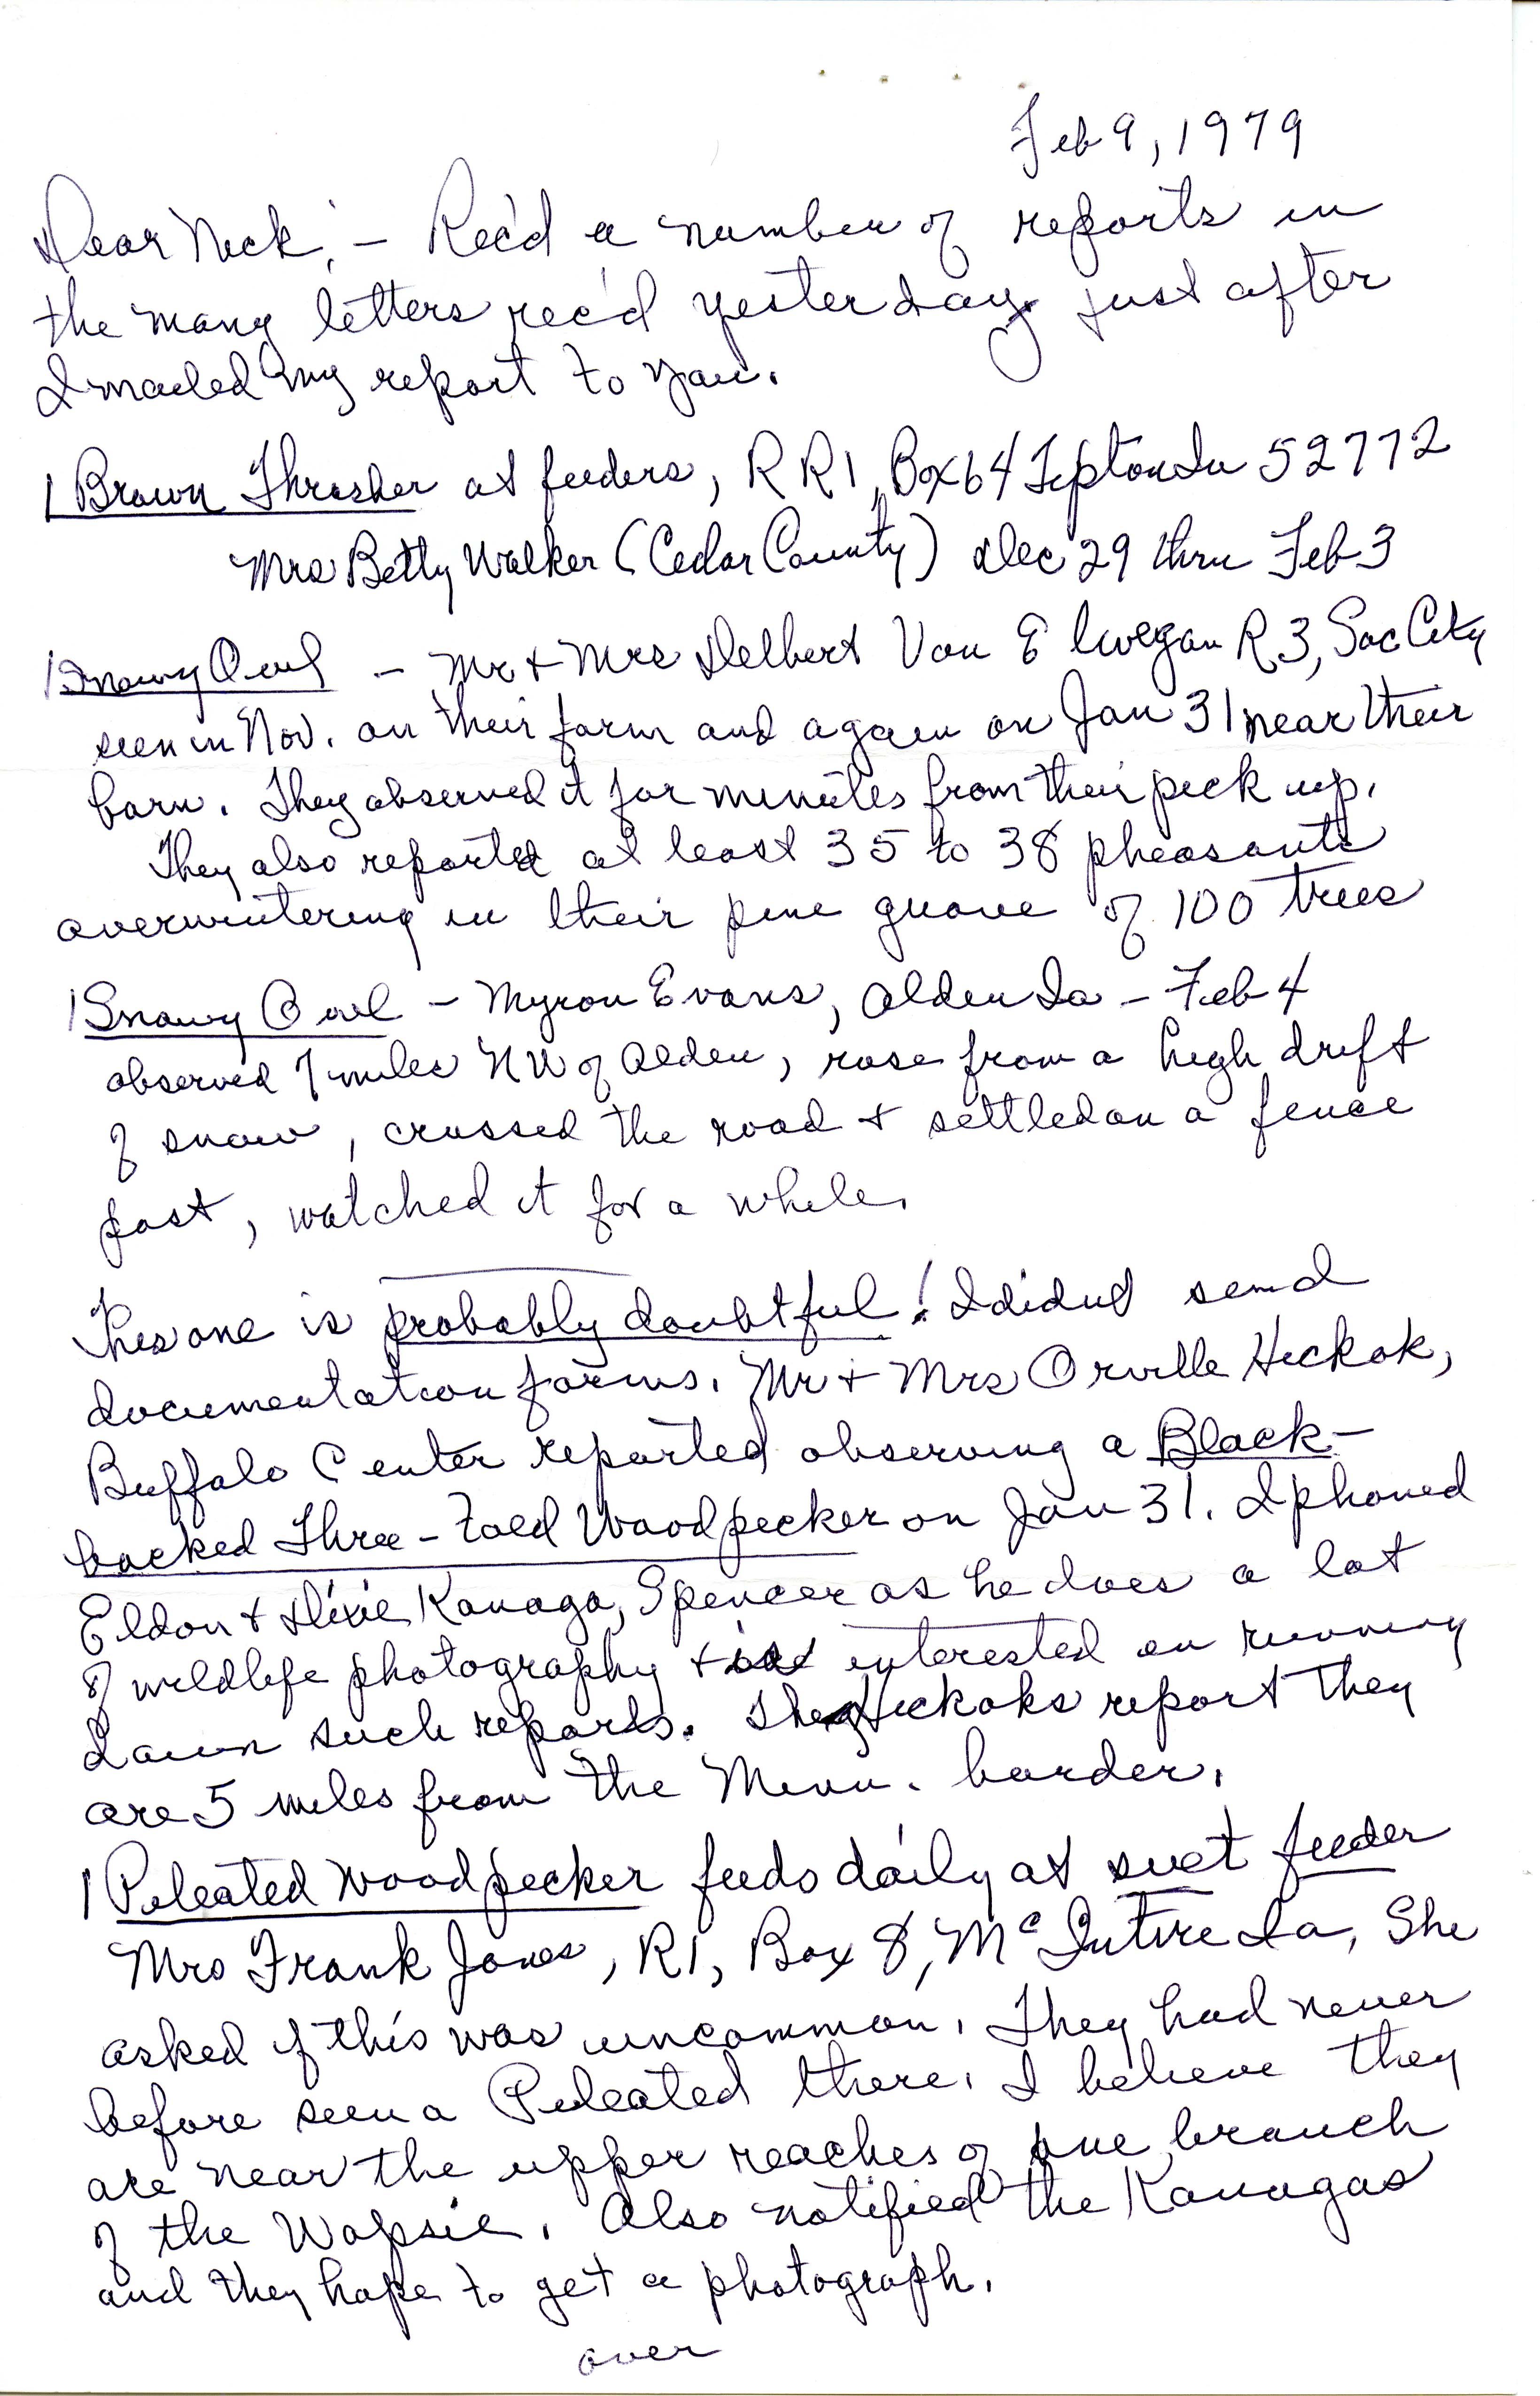 Gladys Black letter to Nicholas S. Halmi regarding winter bird sightings, February 9, 1979